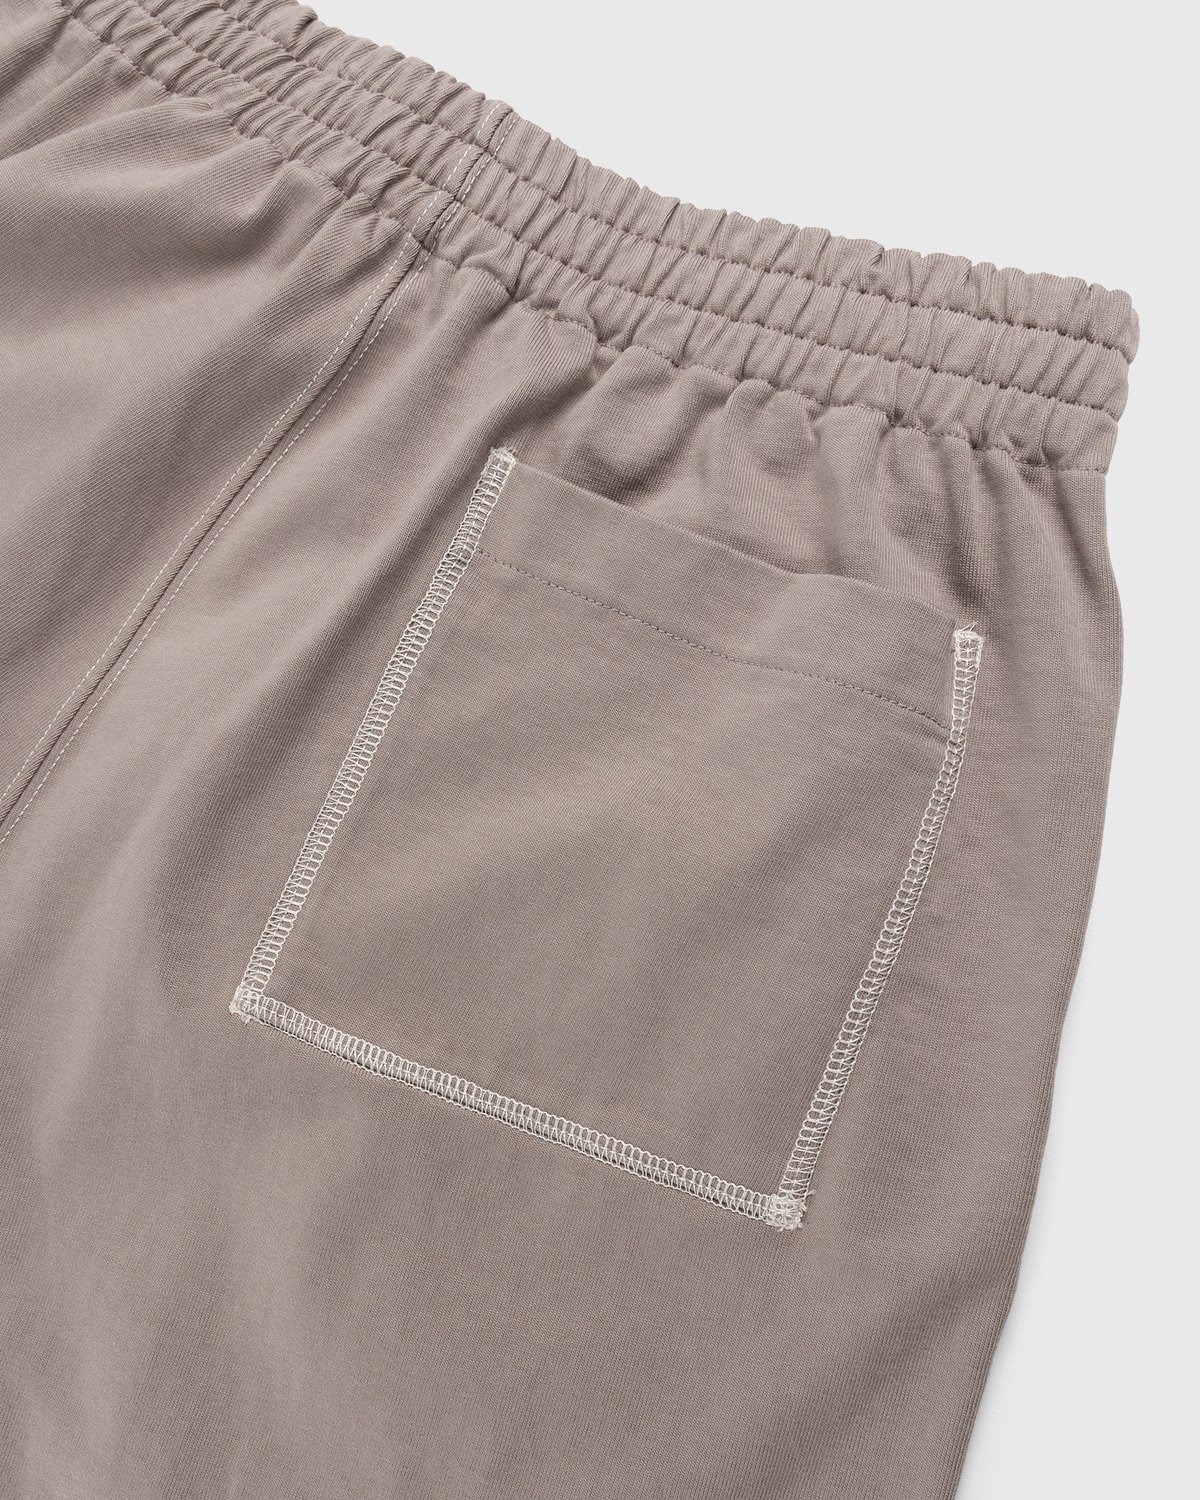 Auralee - High Density Cotton Jersey Shorts Grey Beige - Clothing - Beige - Image 5